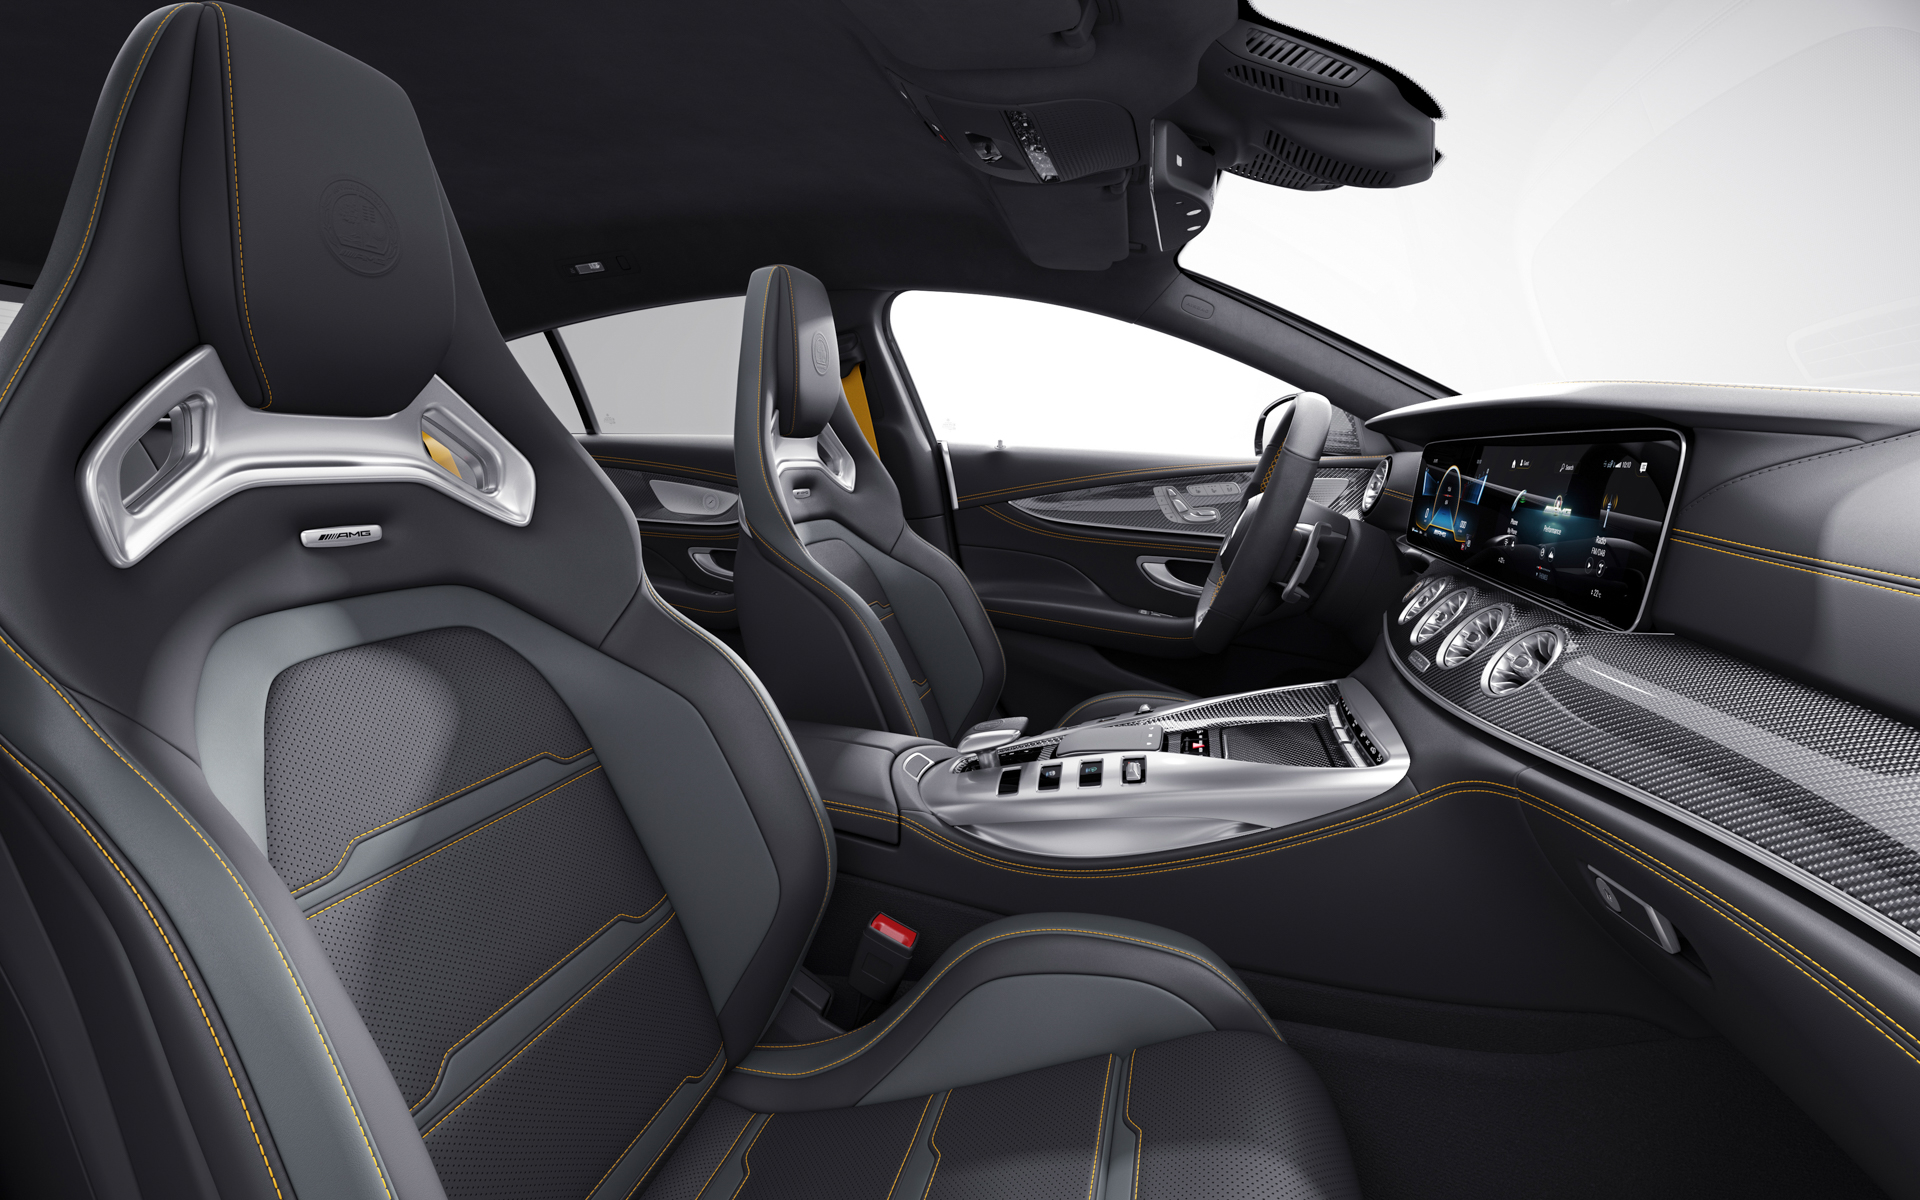 Mercedes-AMG GT 63 S E PERFORMANCE interior